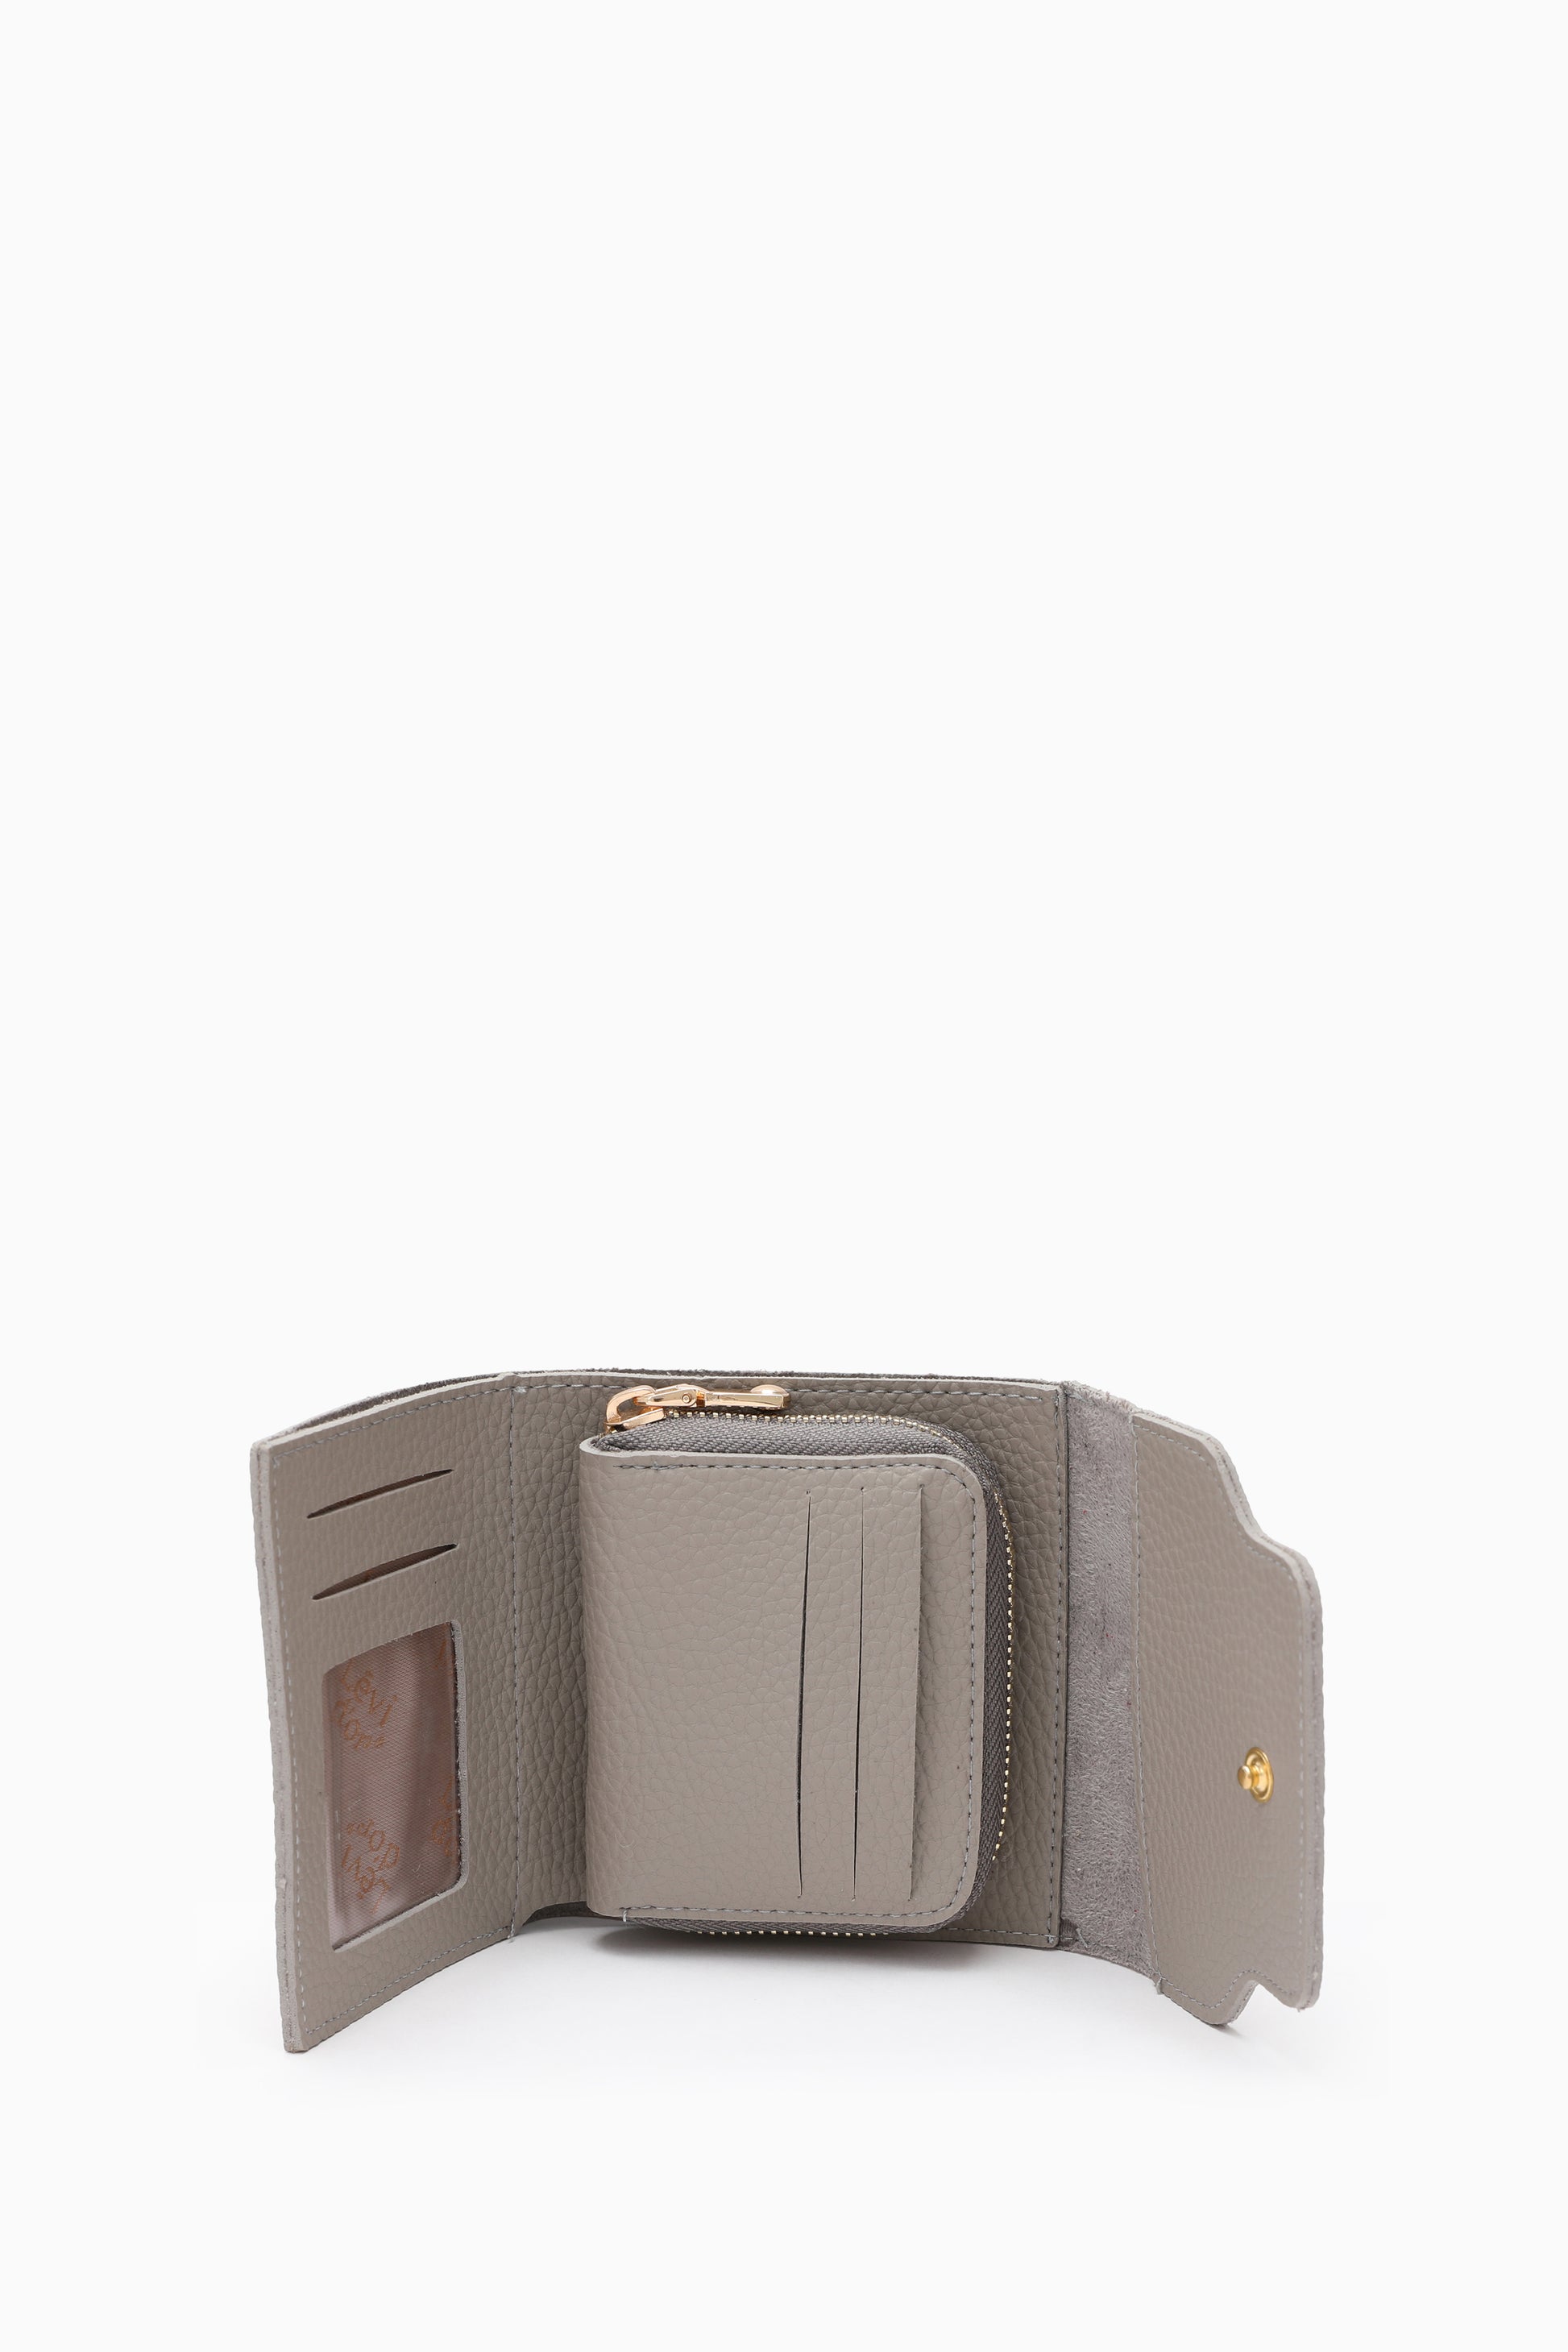 Card wallet - 21037- Gray - bakkaclothing